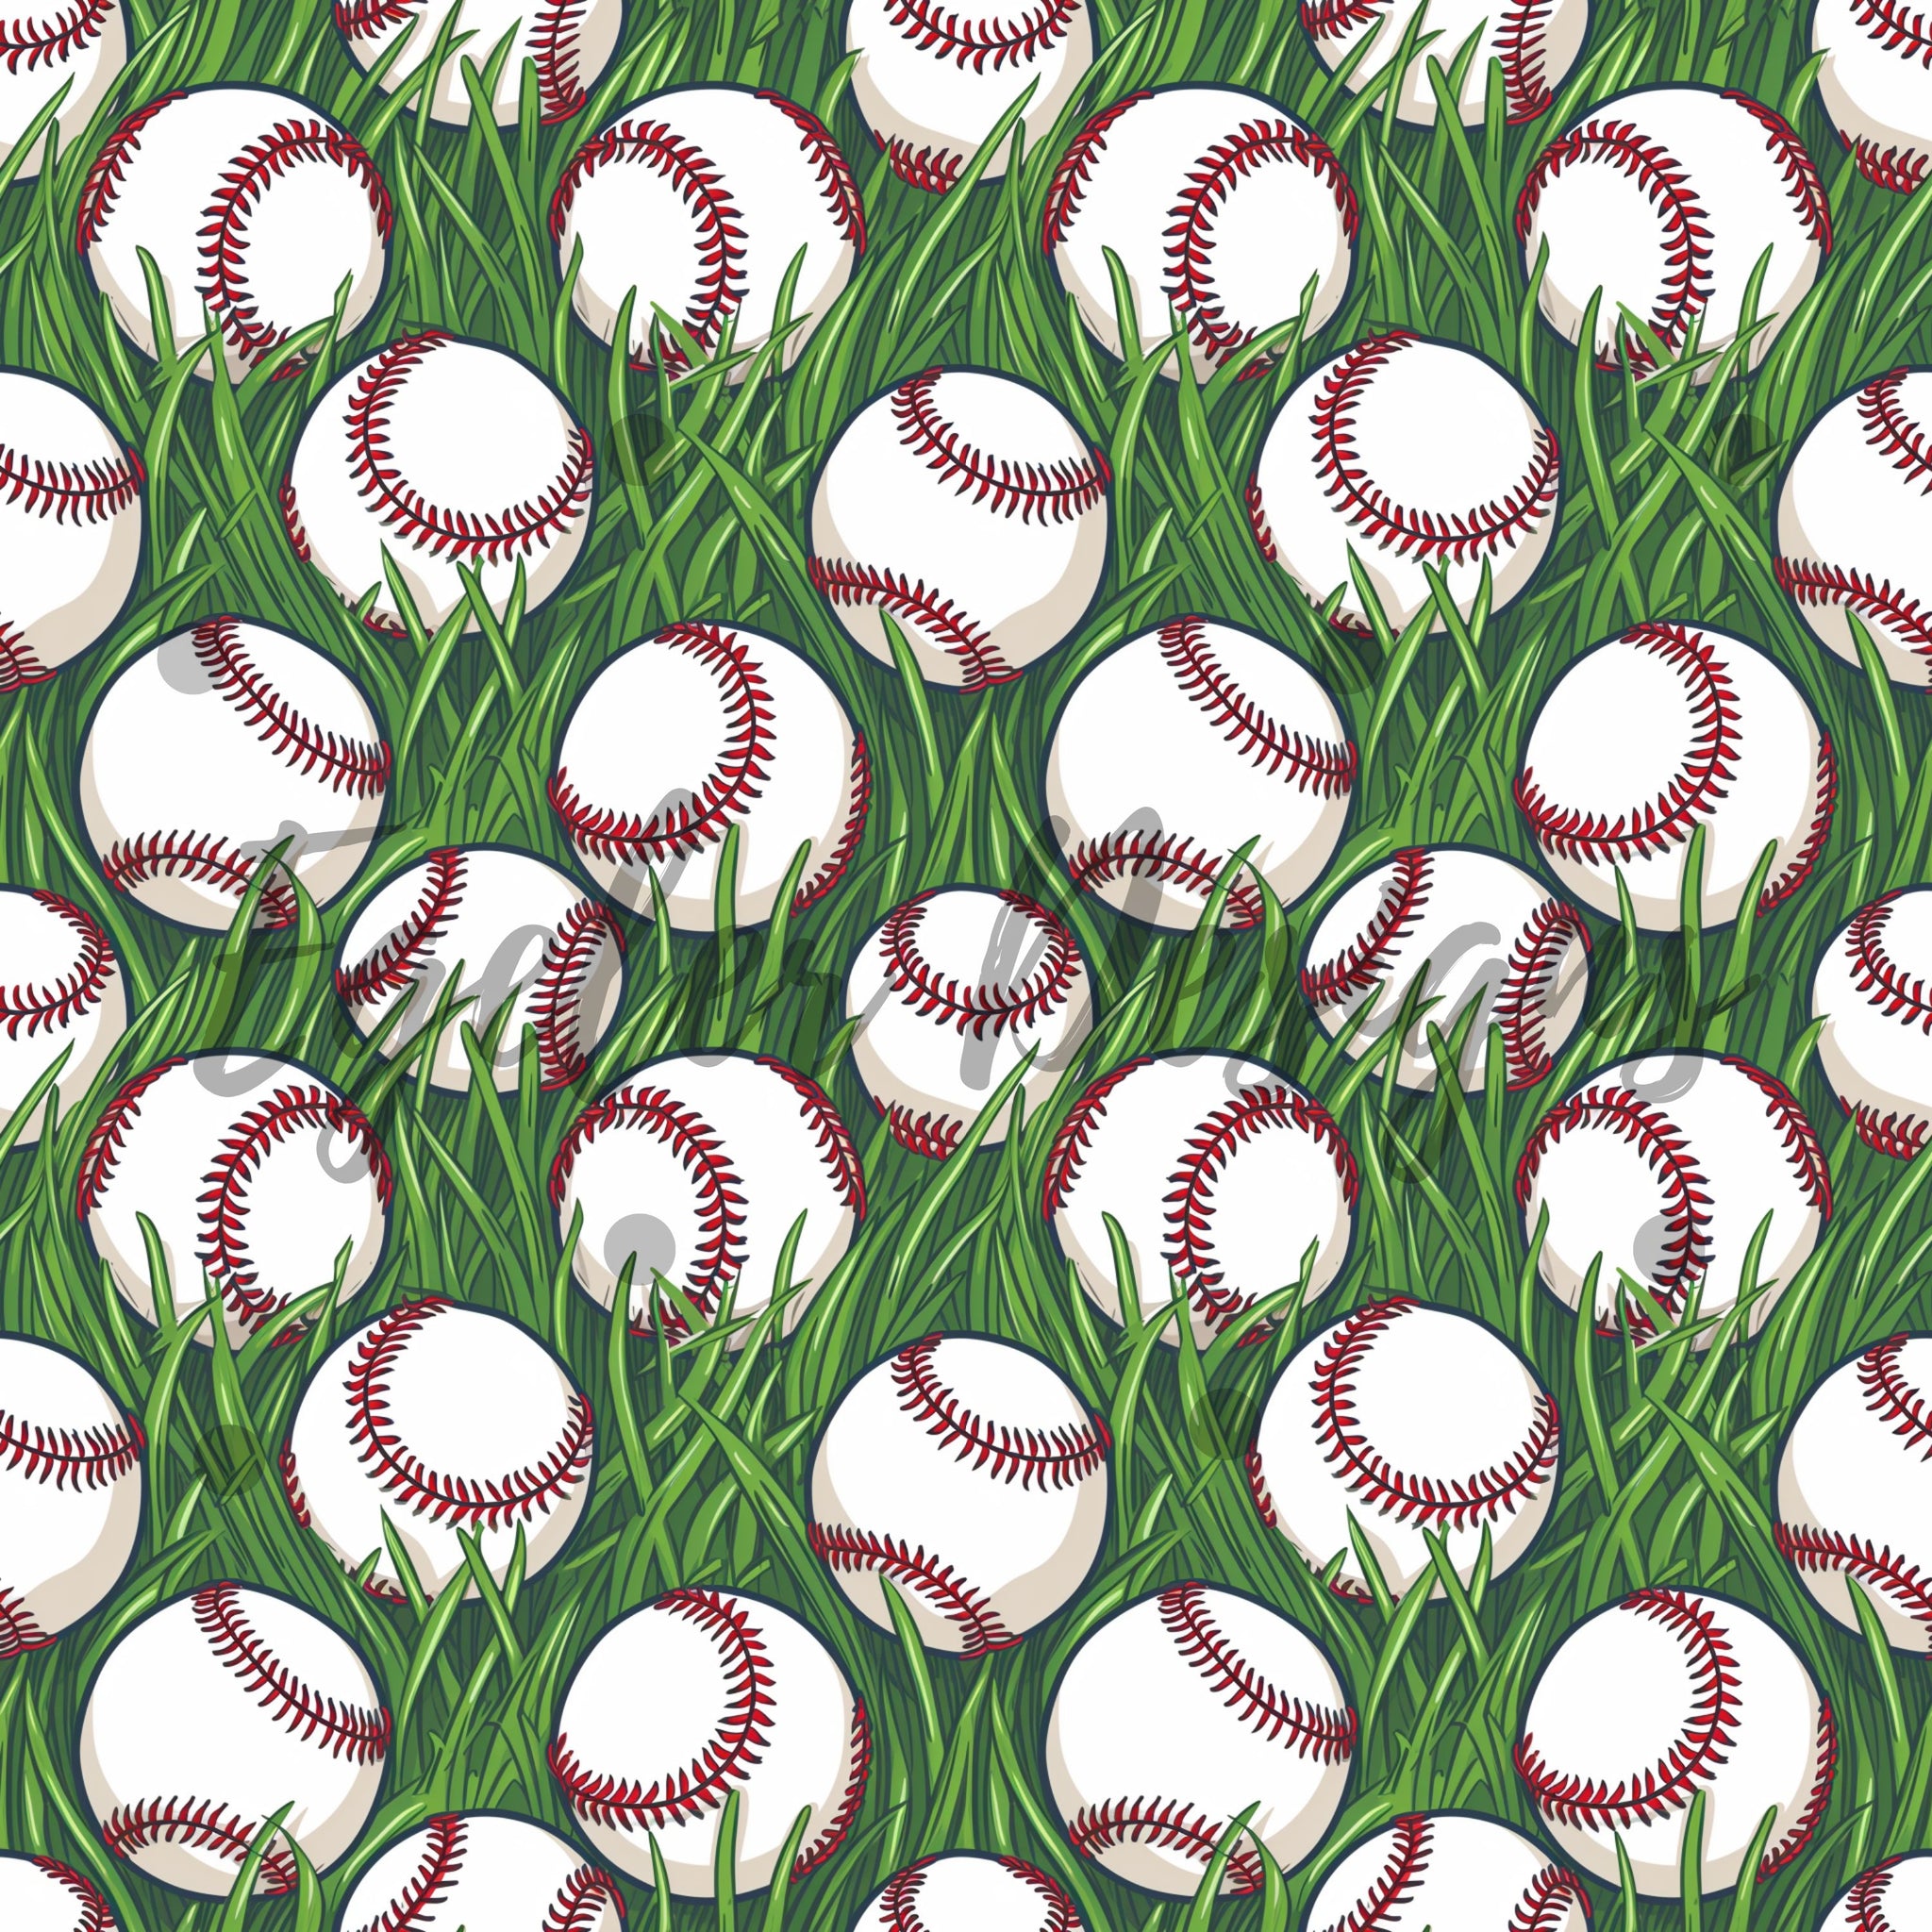 Grass Baseballs Seamless Pattern Digital Download